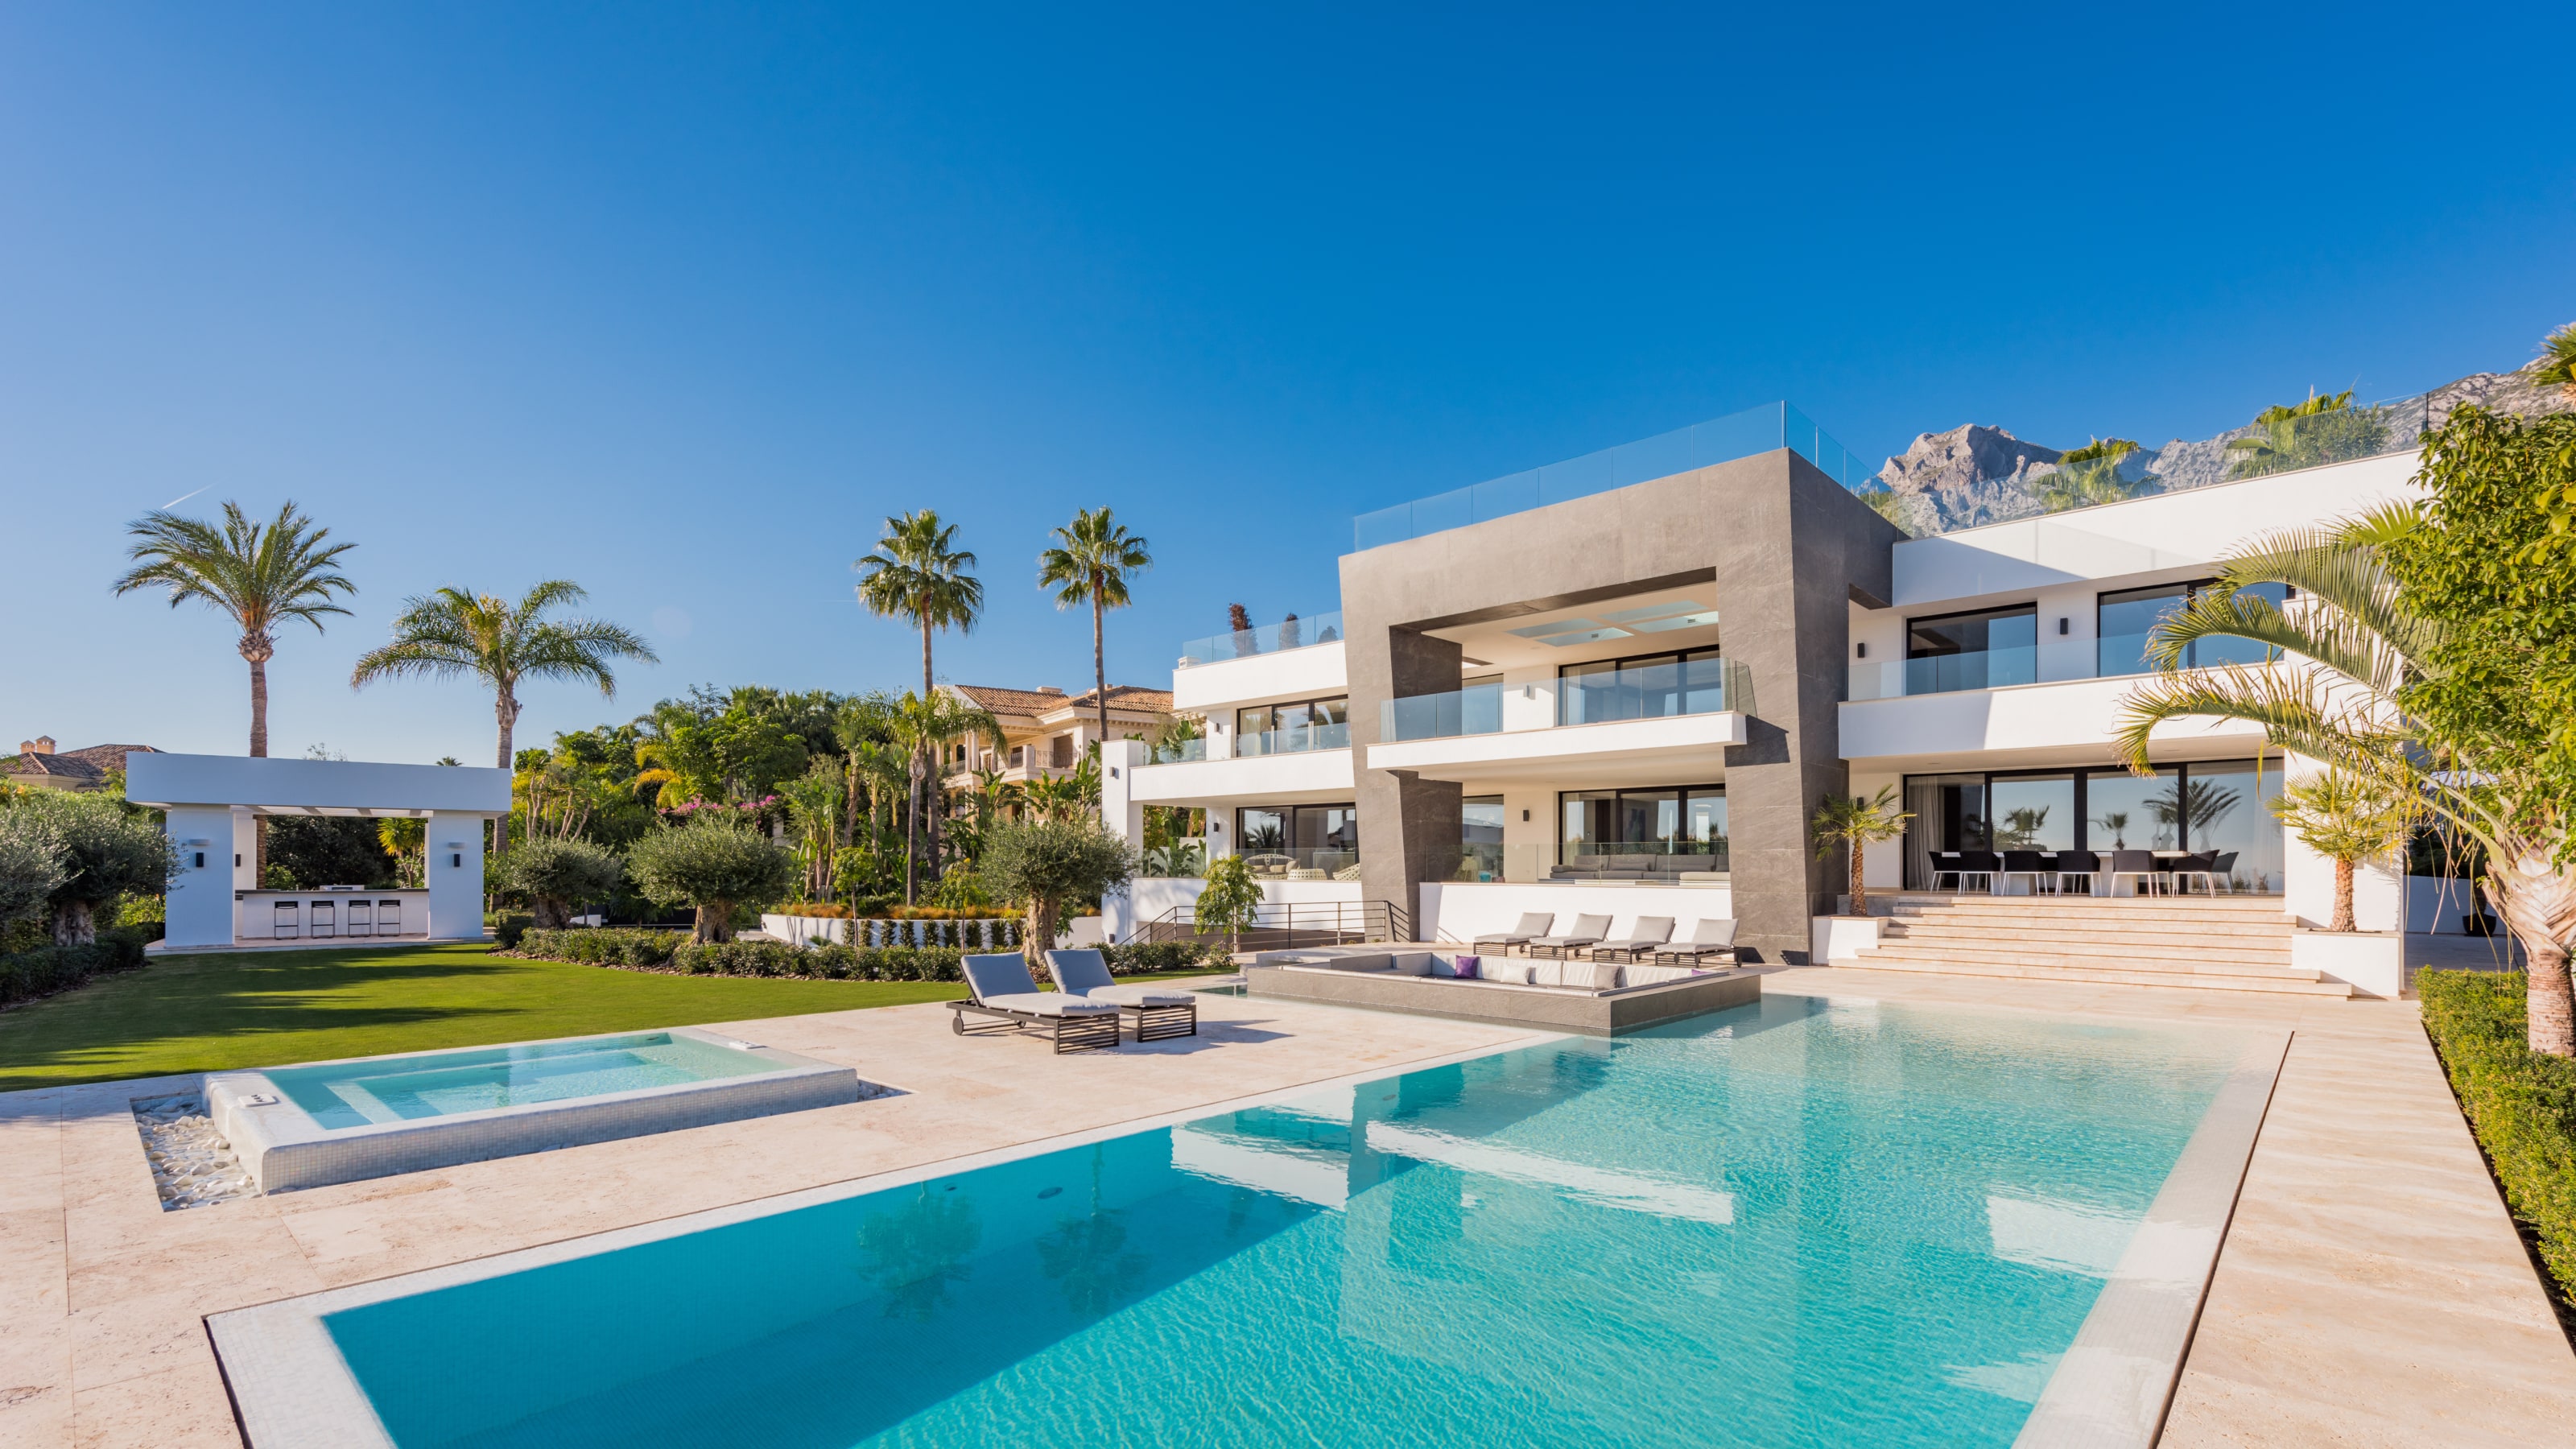 Villa Poehei Marbella - Vue extérieure de la villa avec piscine